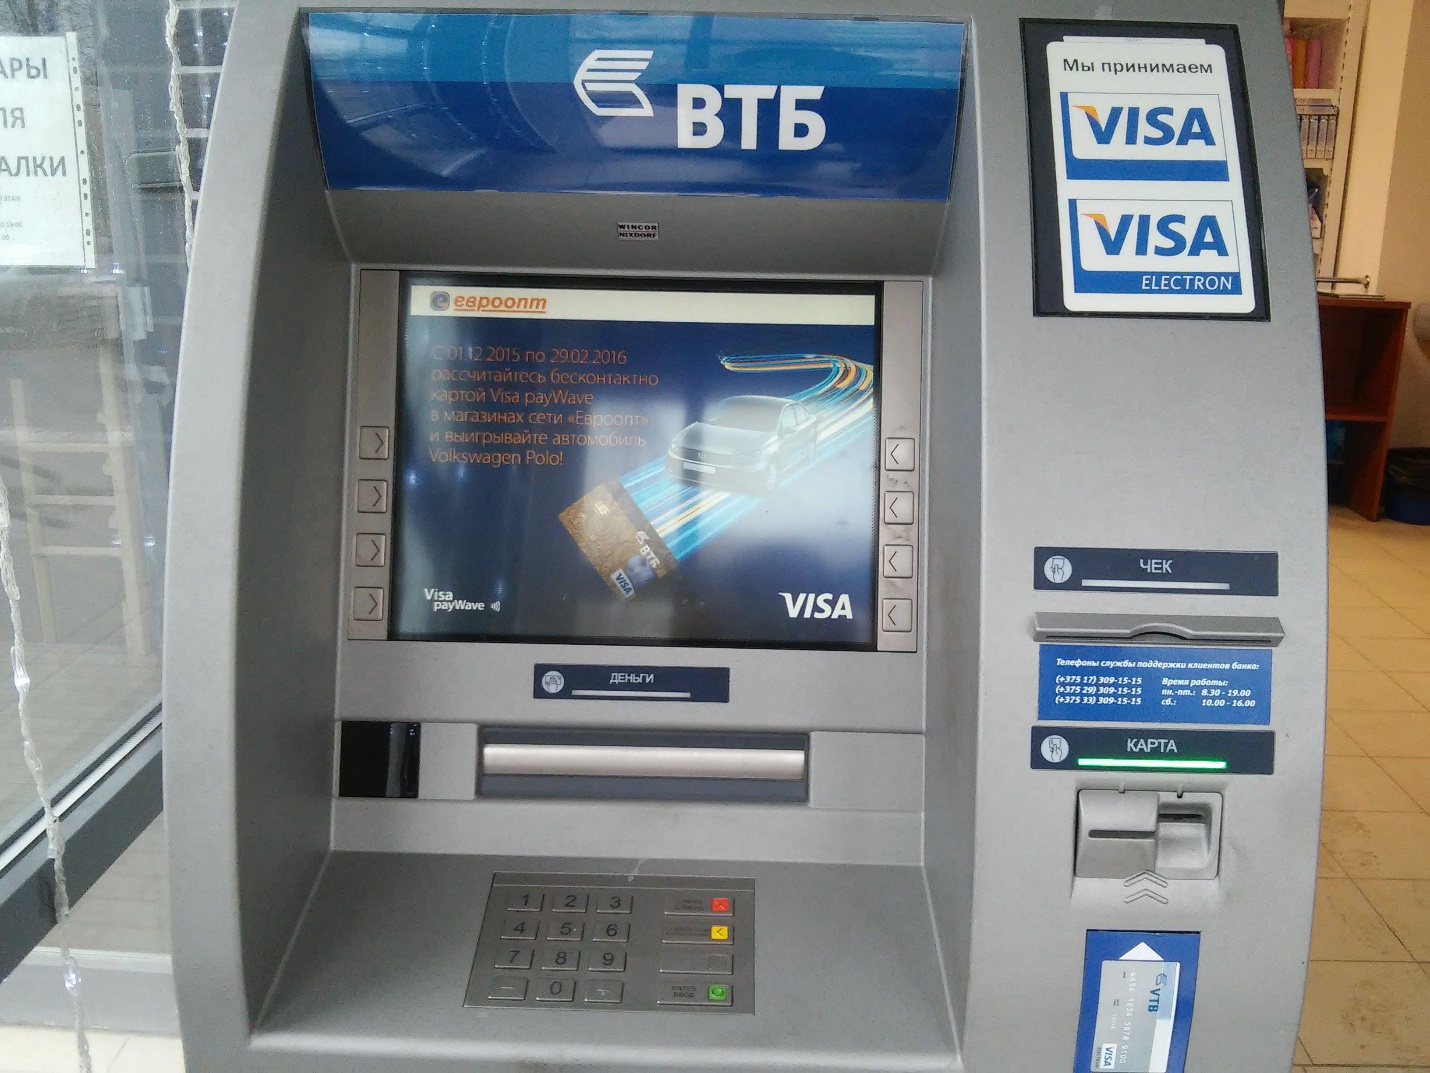 Фото №2. Внешний вид обычного банкомата ВТБ